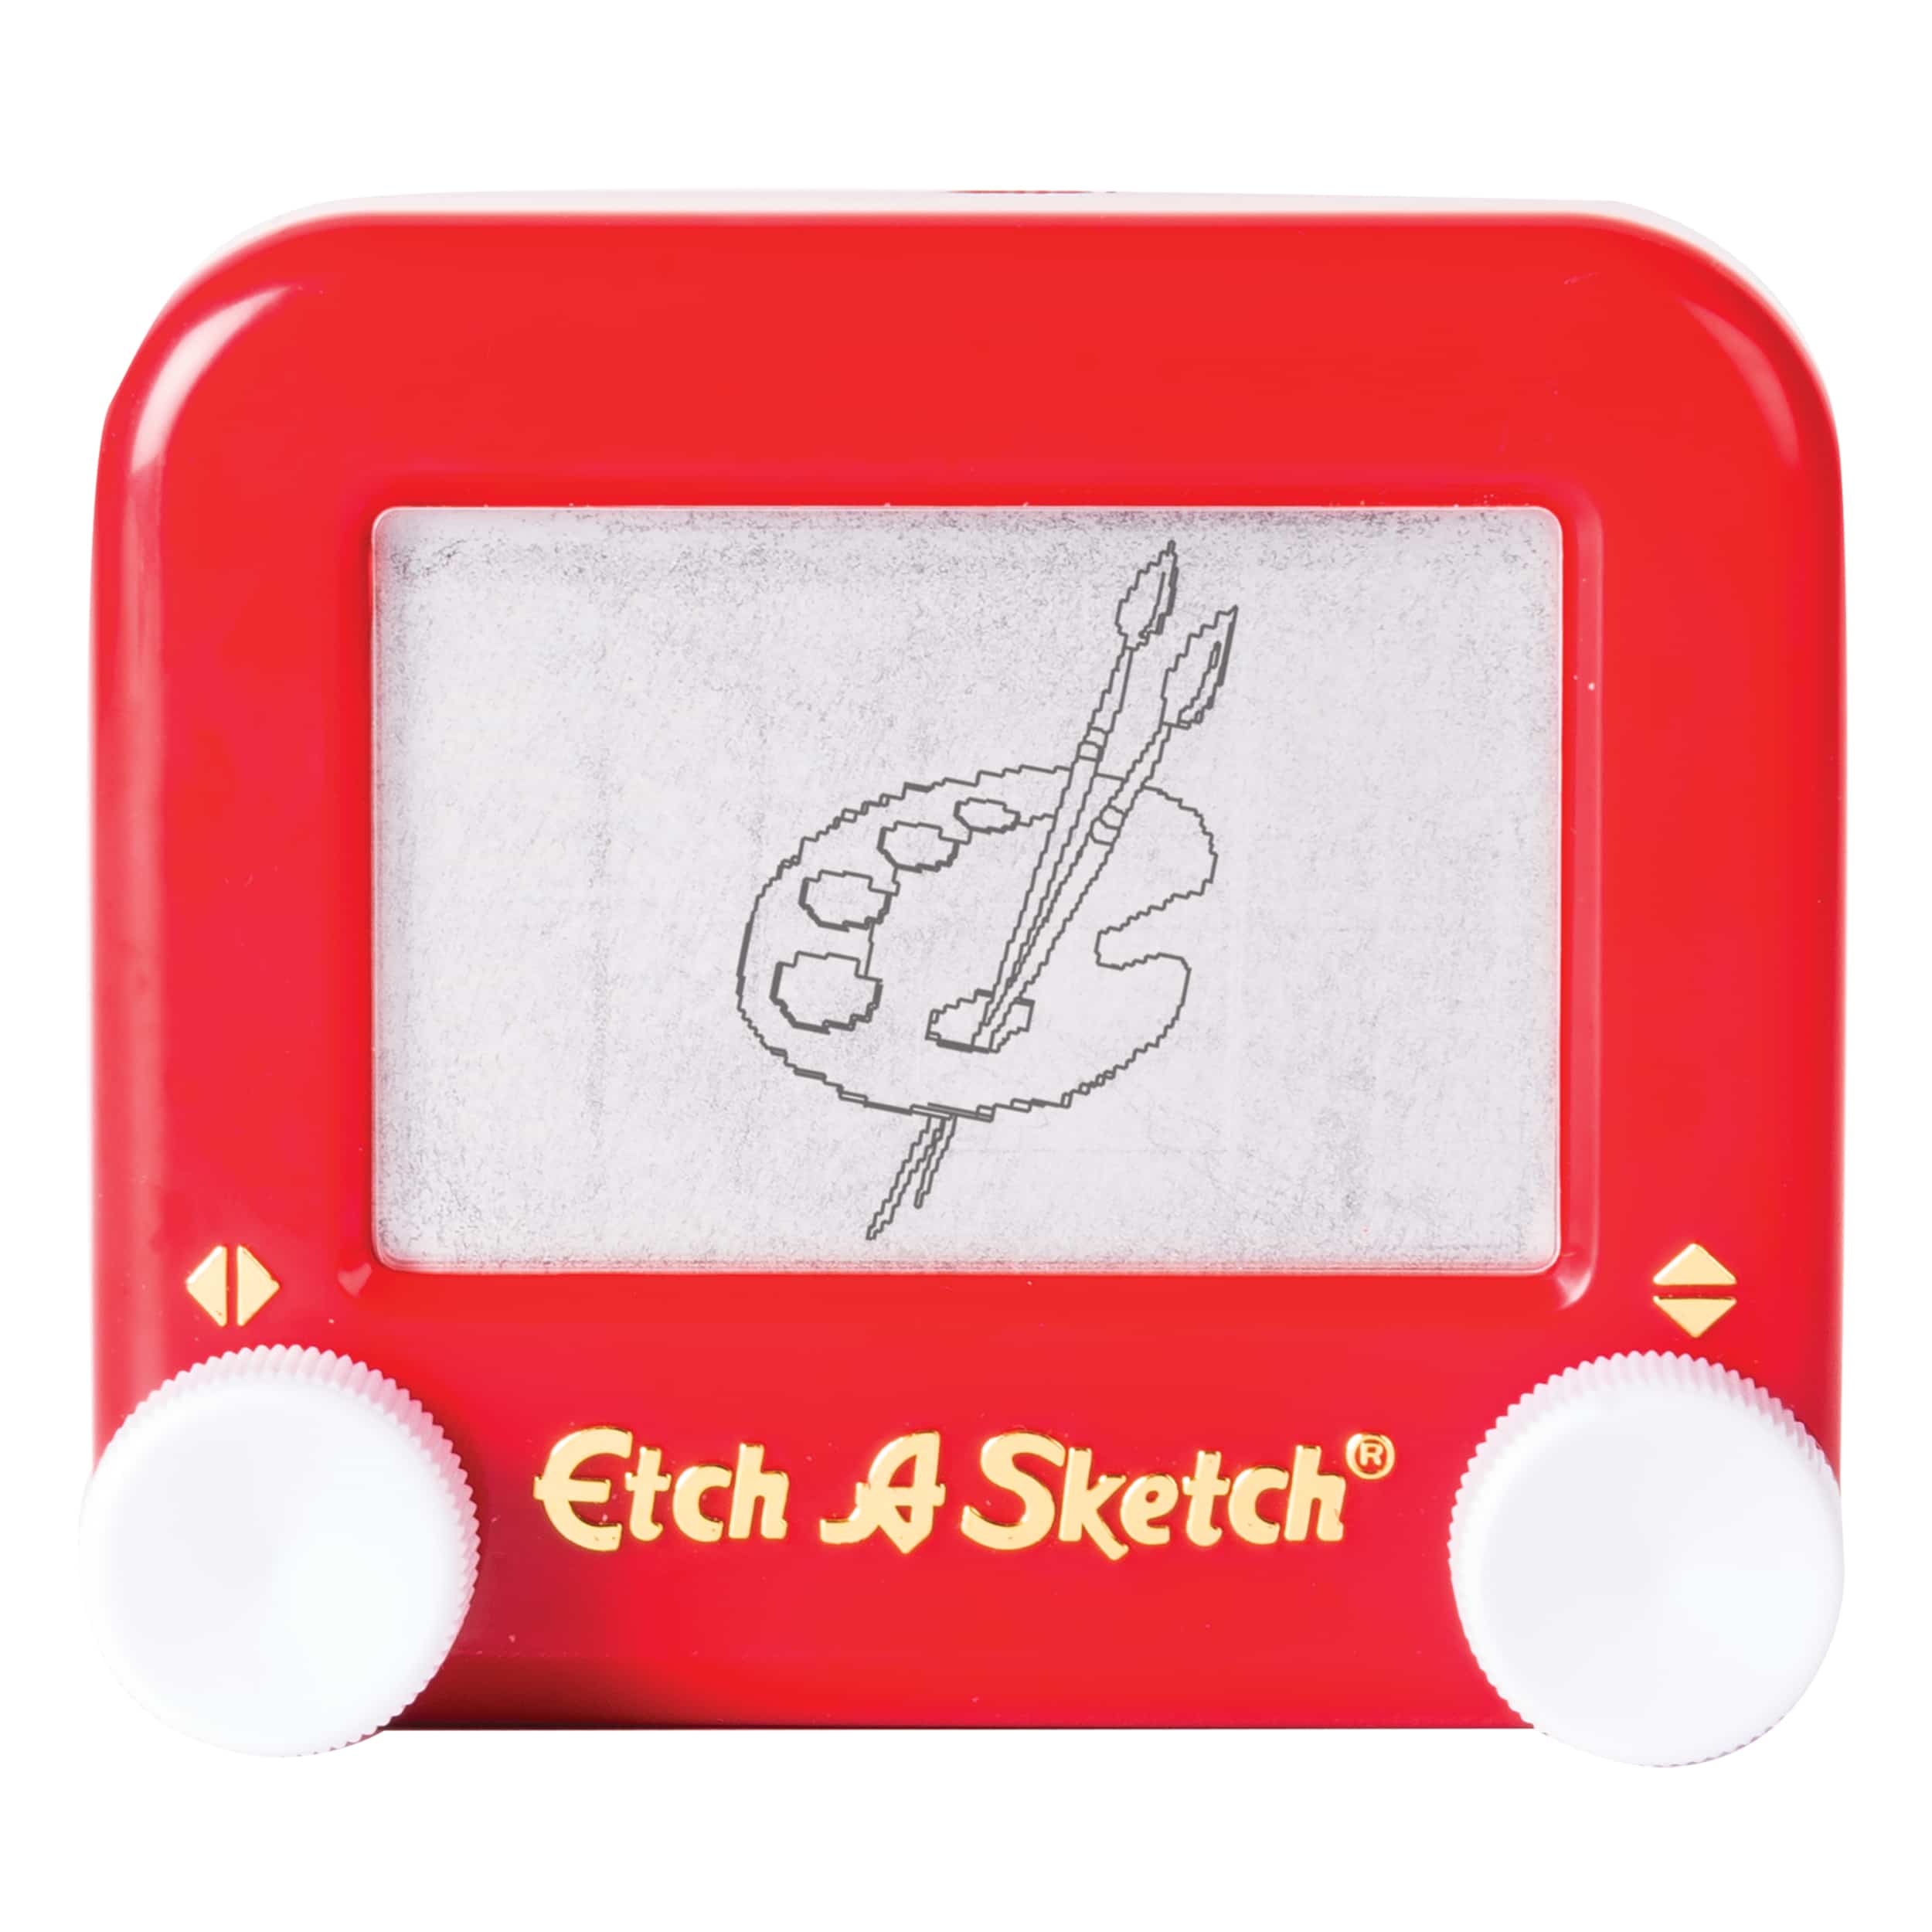 Etch a Sketch Pocket